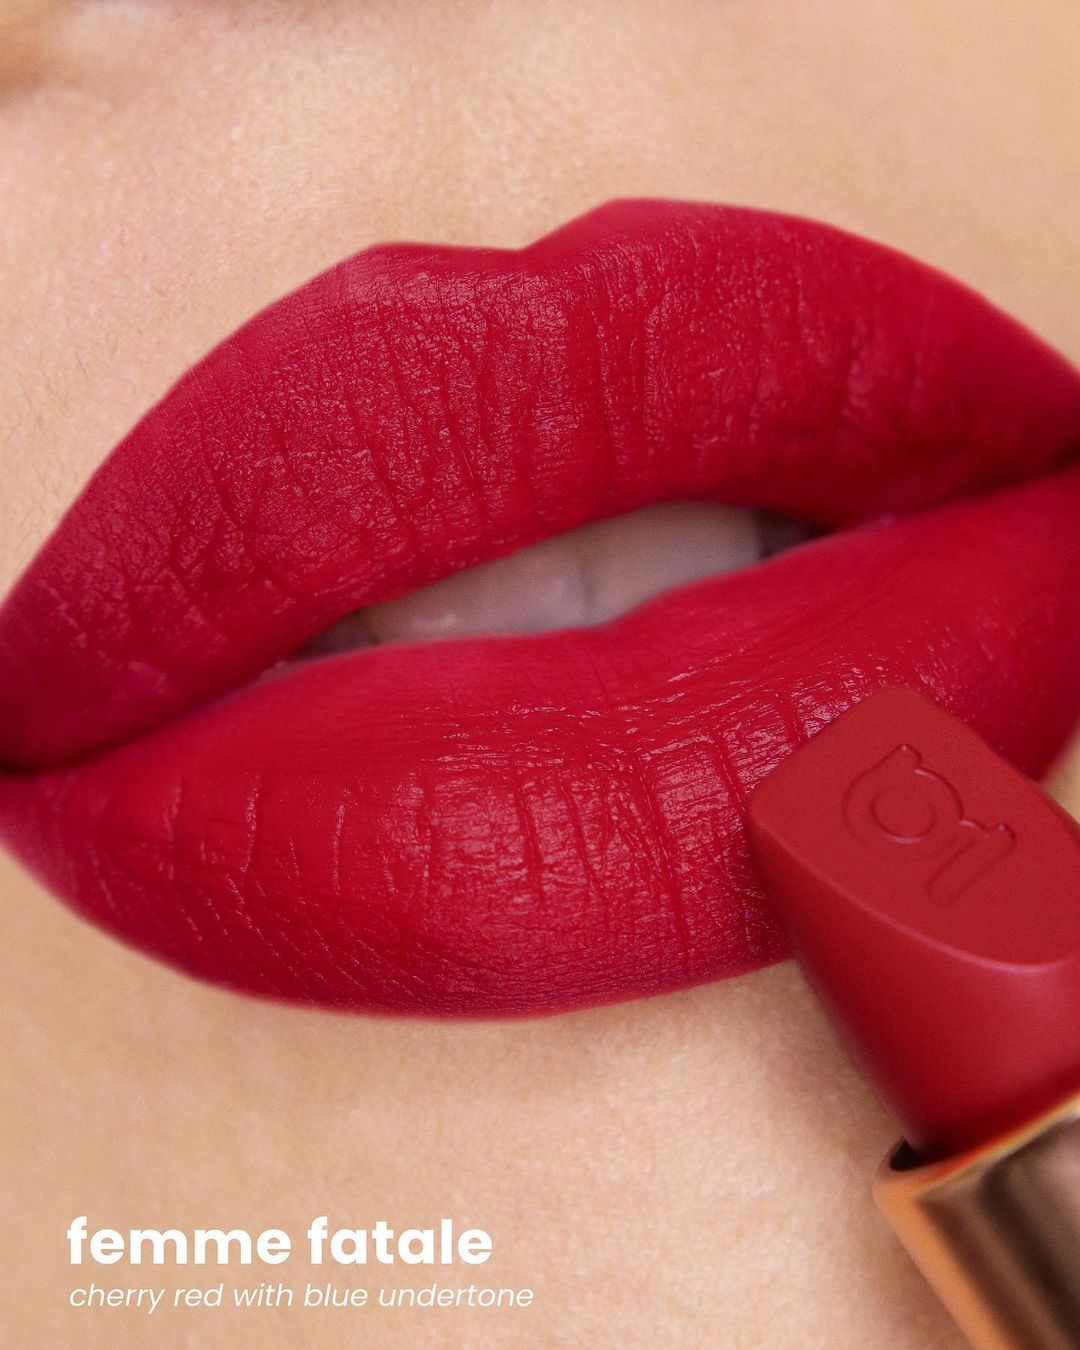 GRWM Cosmetics classic red lip